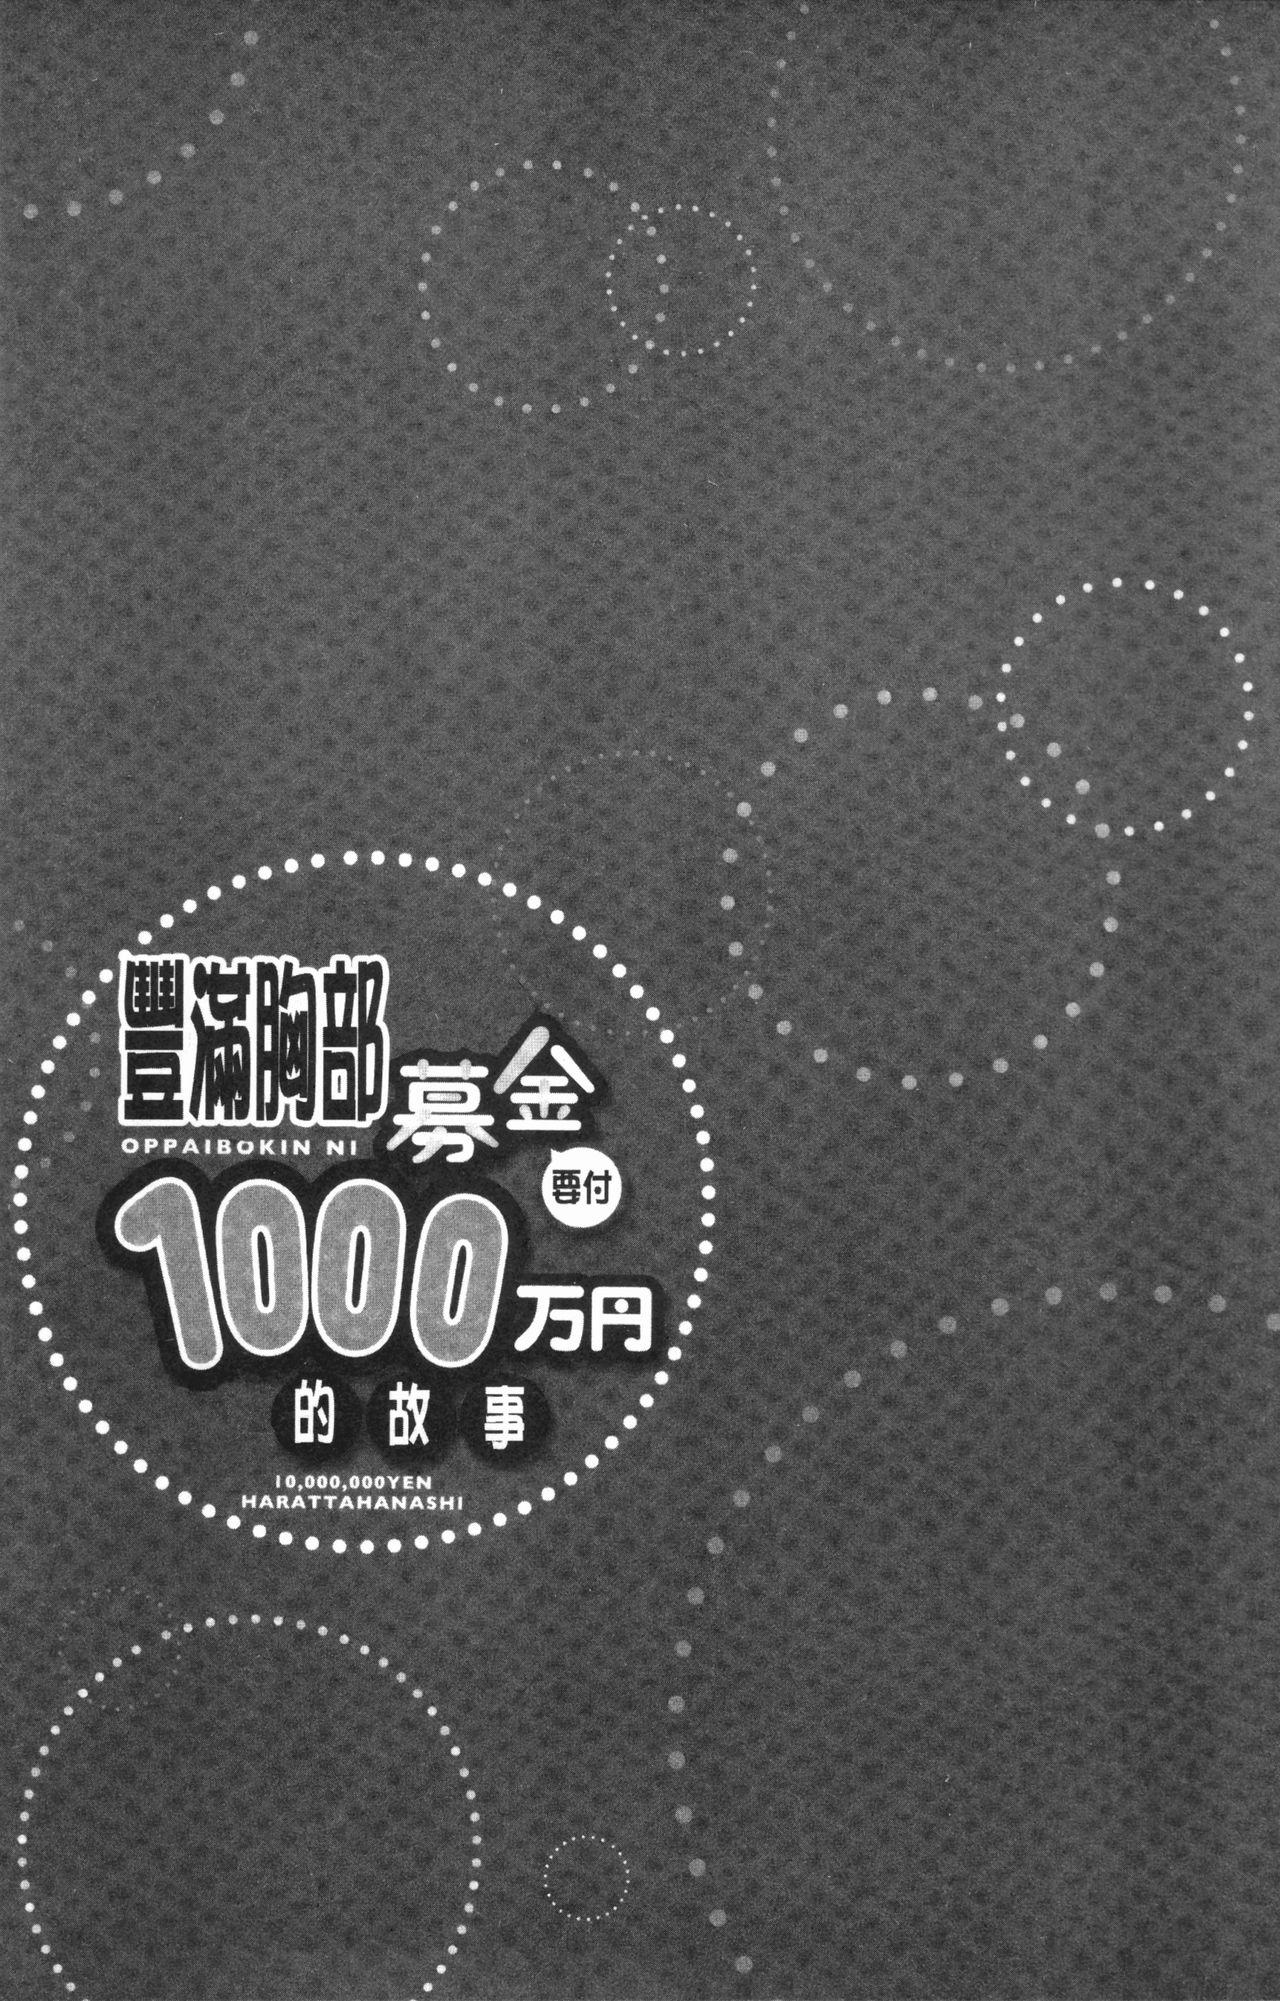 Oppai Bokin ni 1000-man Yen Haratta Hanashi | 柔嫩美乳募款時1000万円都花光光 131